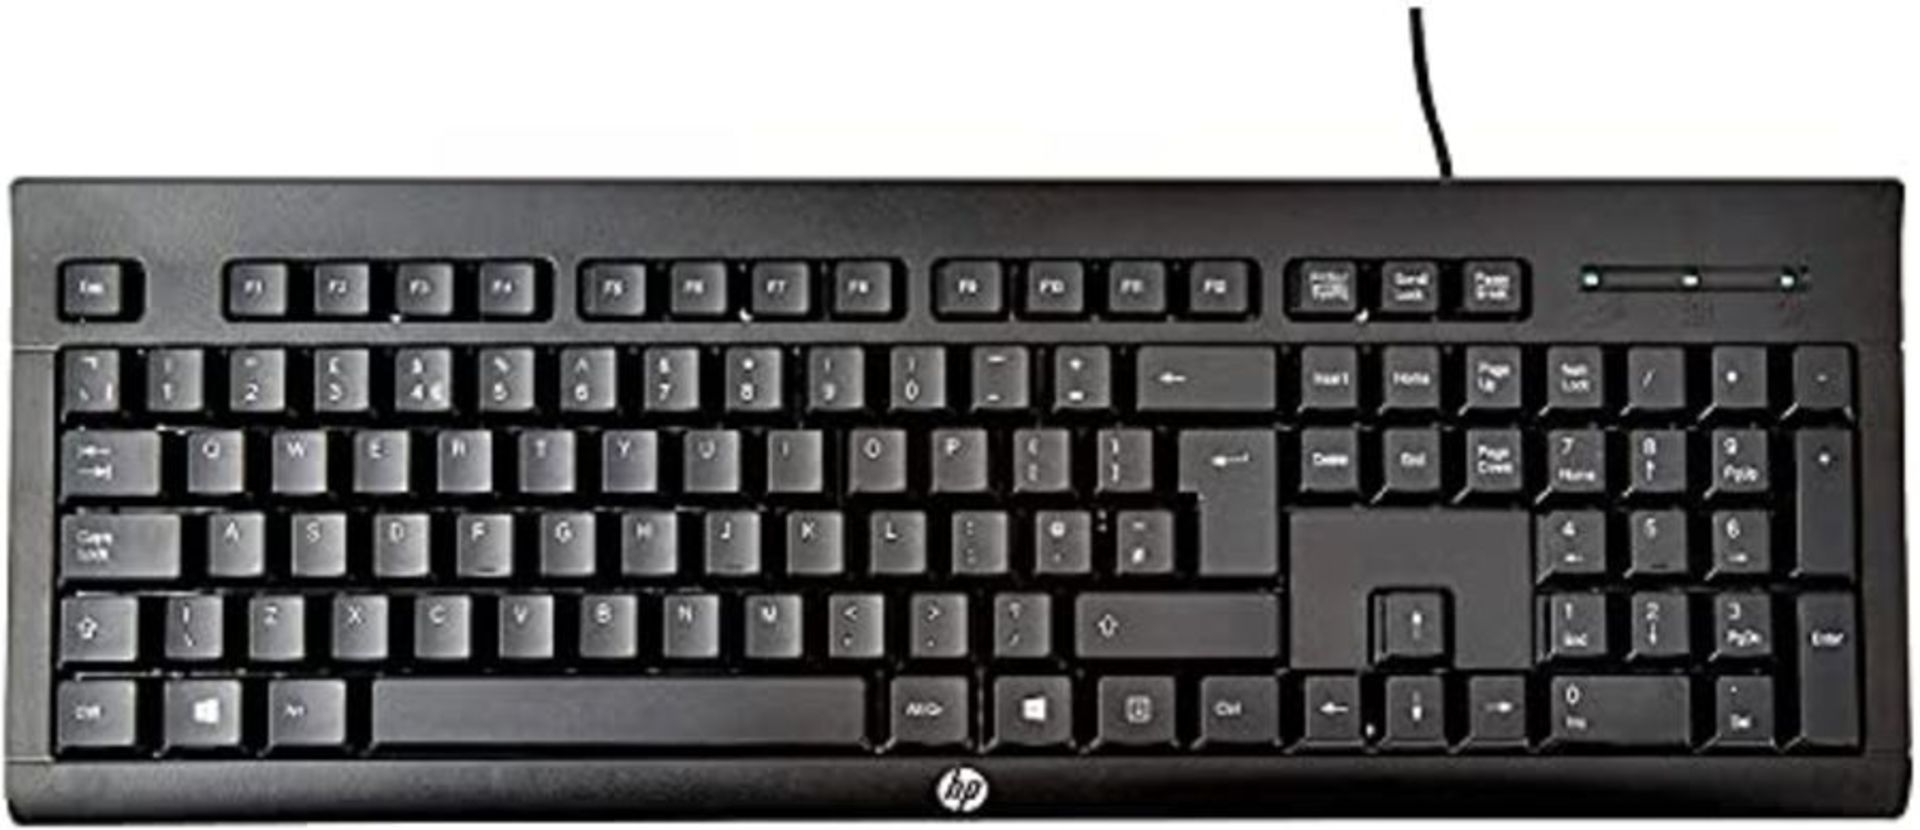 HP K1500 Black Wired USB Keyboard (UK Layout)